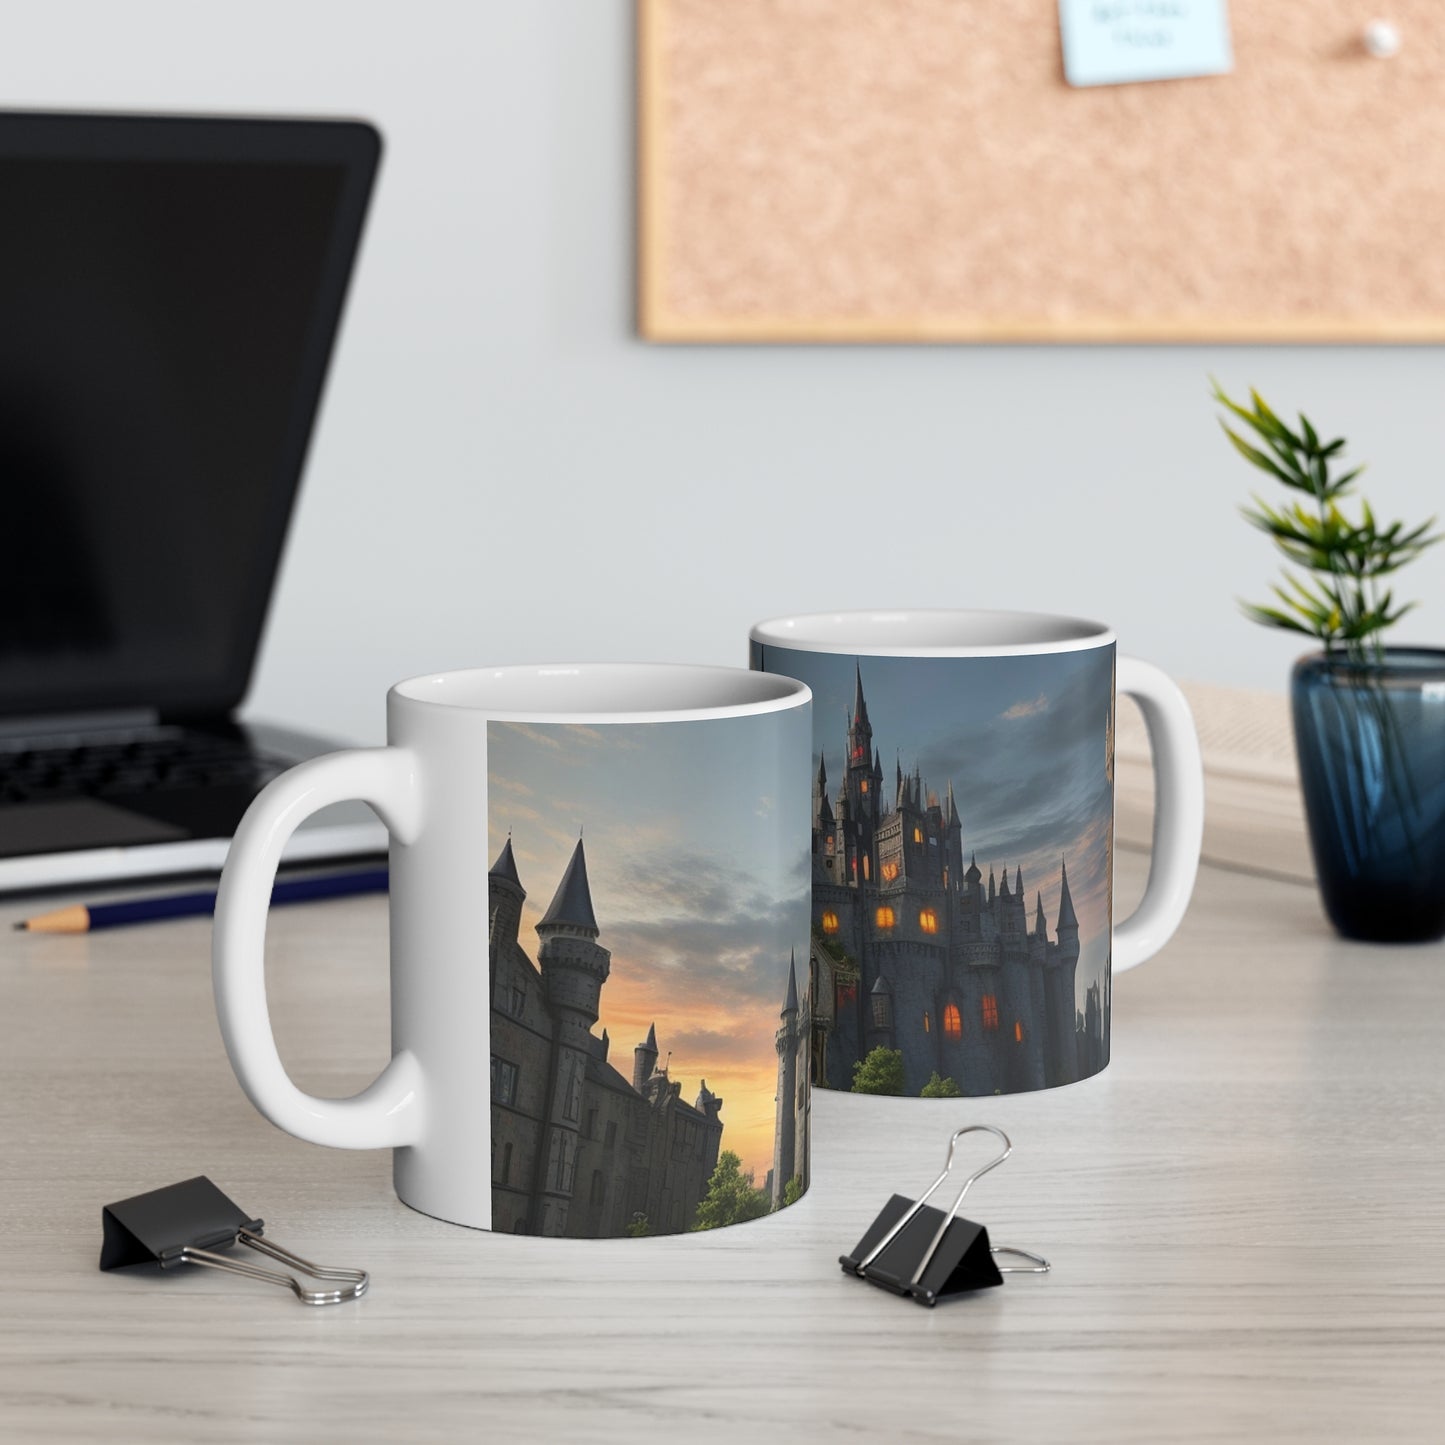 Scenic Castle With Glowing Windows Mug - Ceramic Coffee Mug 11oz